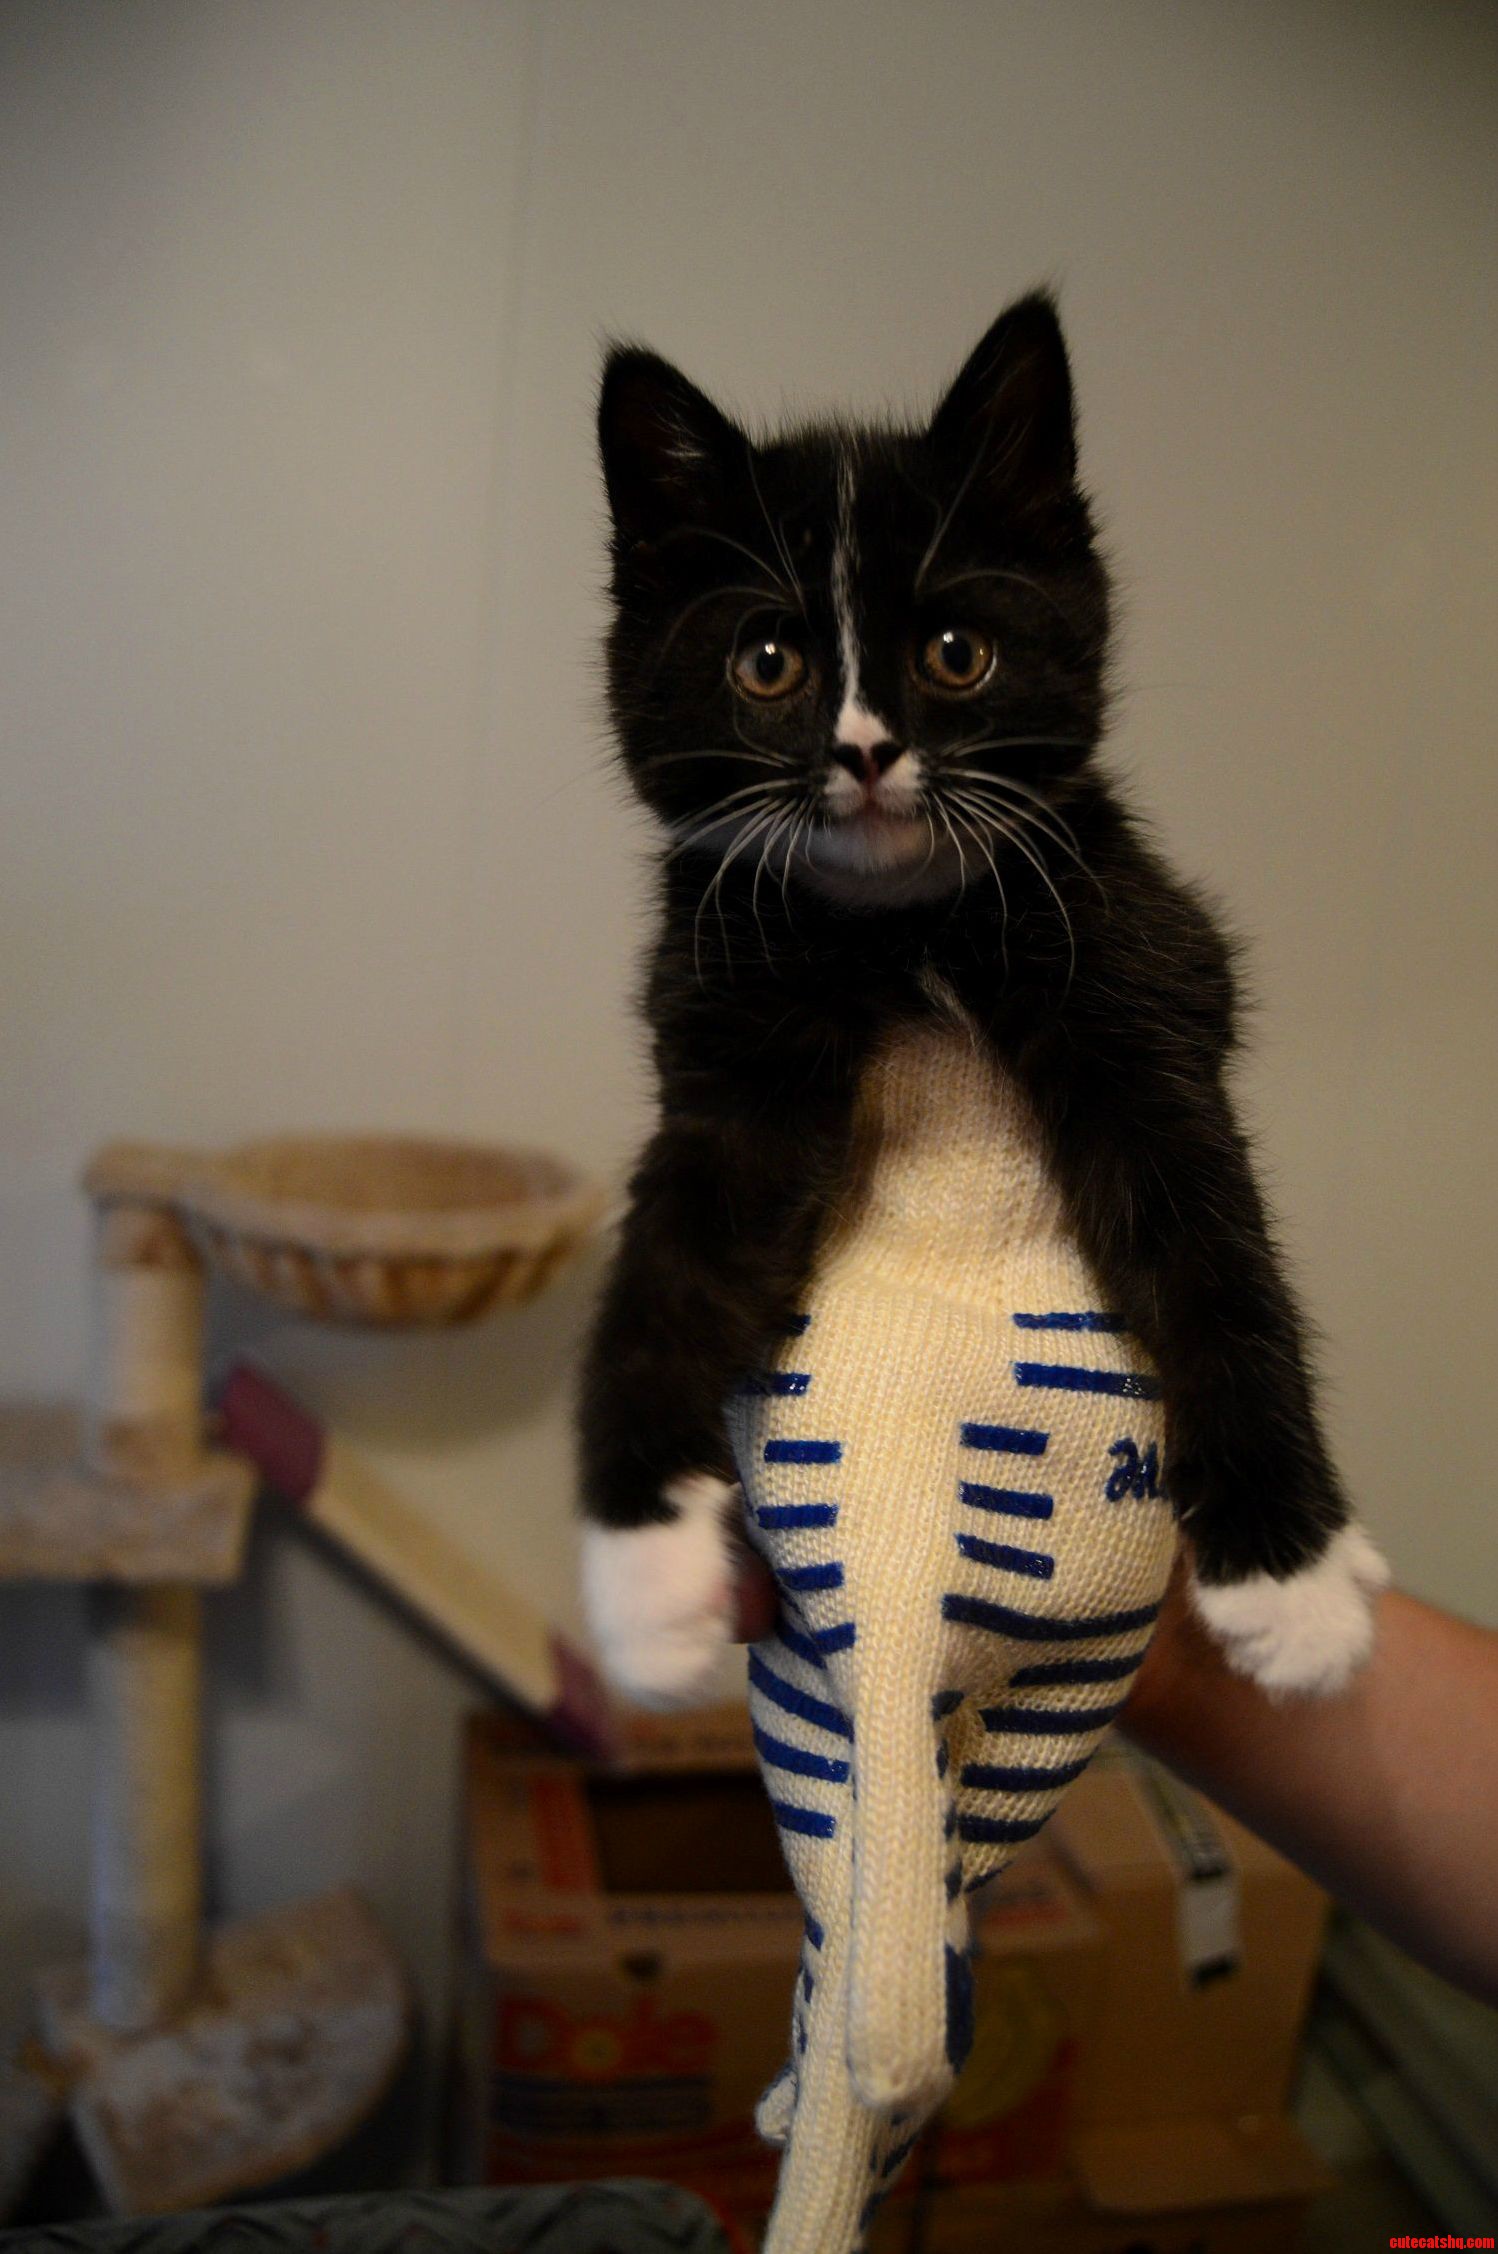 Kitten in a glove